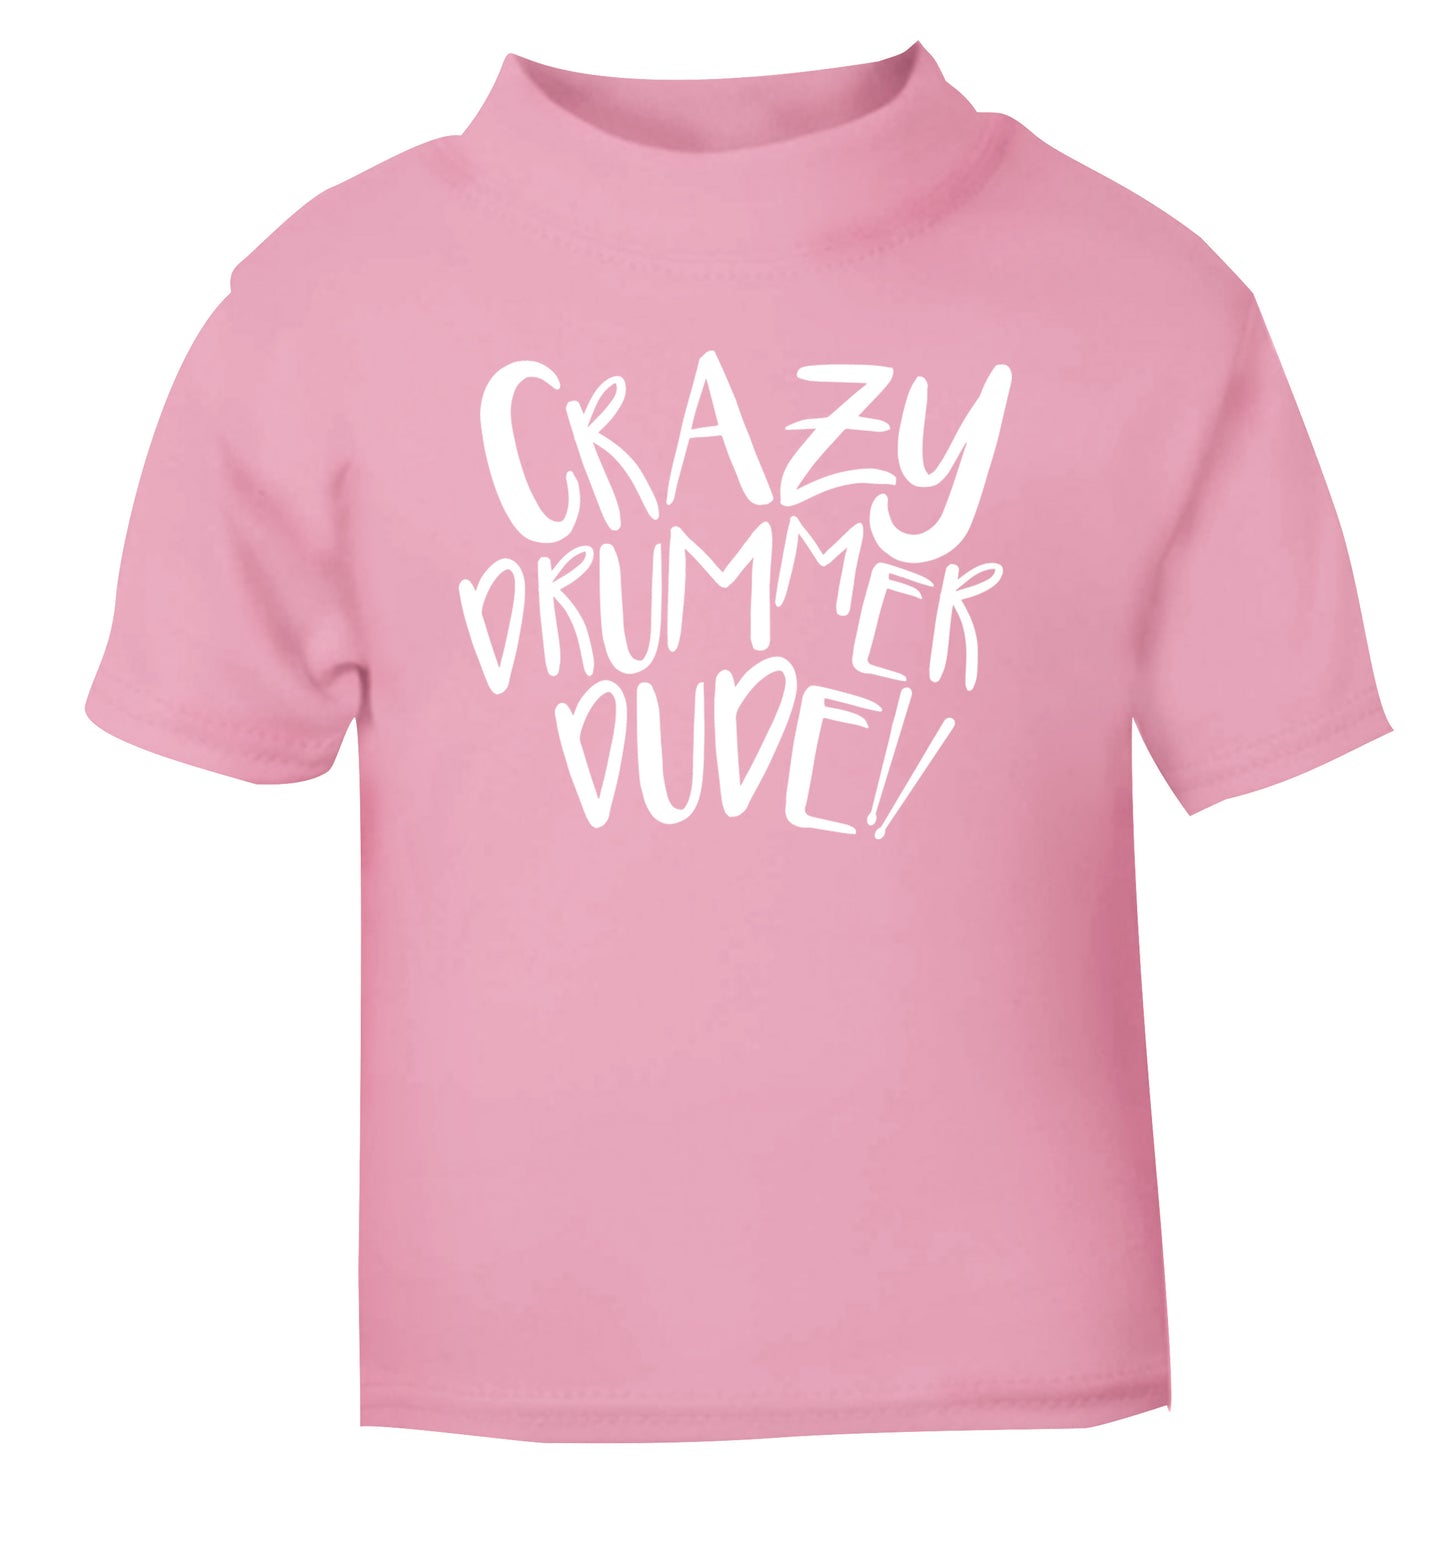 Crazy drummer dude light pink Baby Toddler Tshirt 2 Years